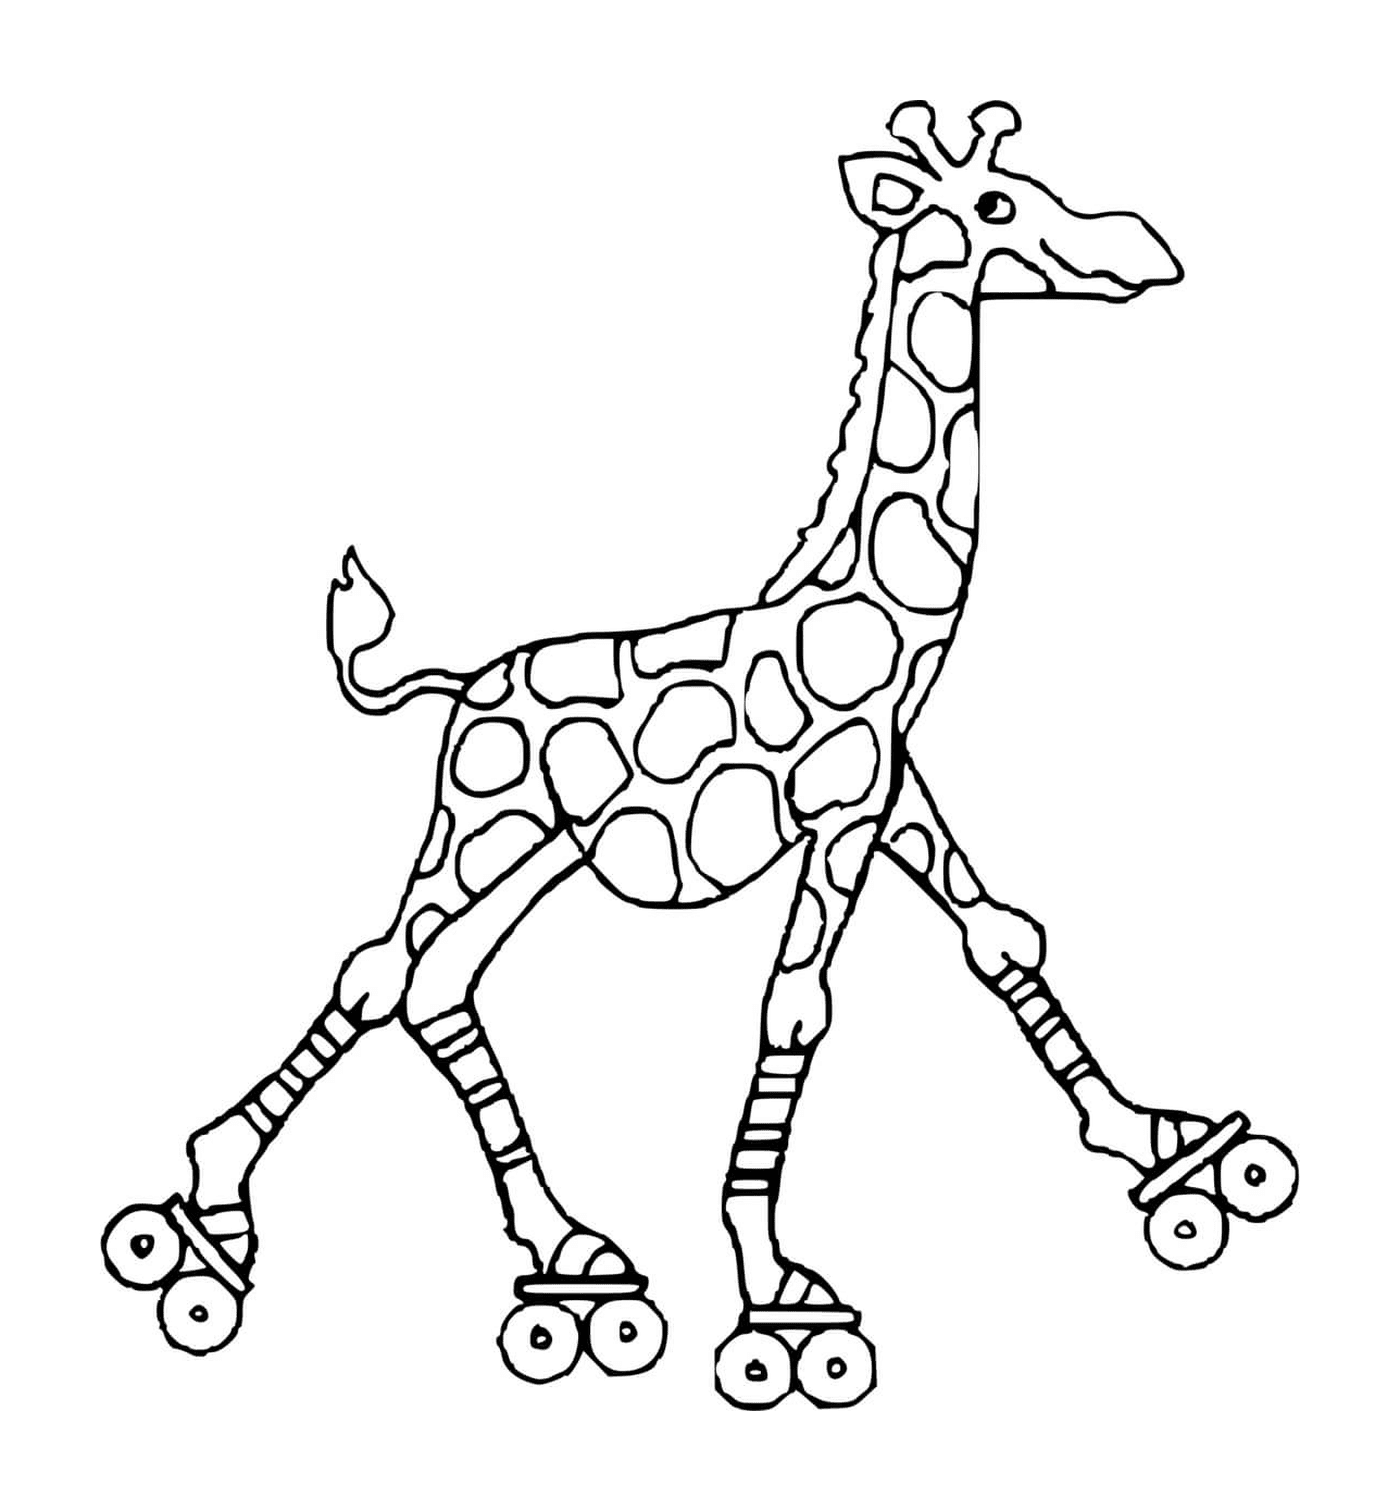  Girafe with roller skates 